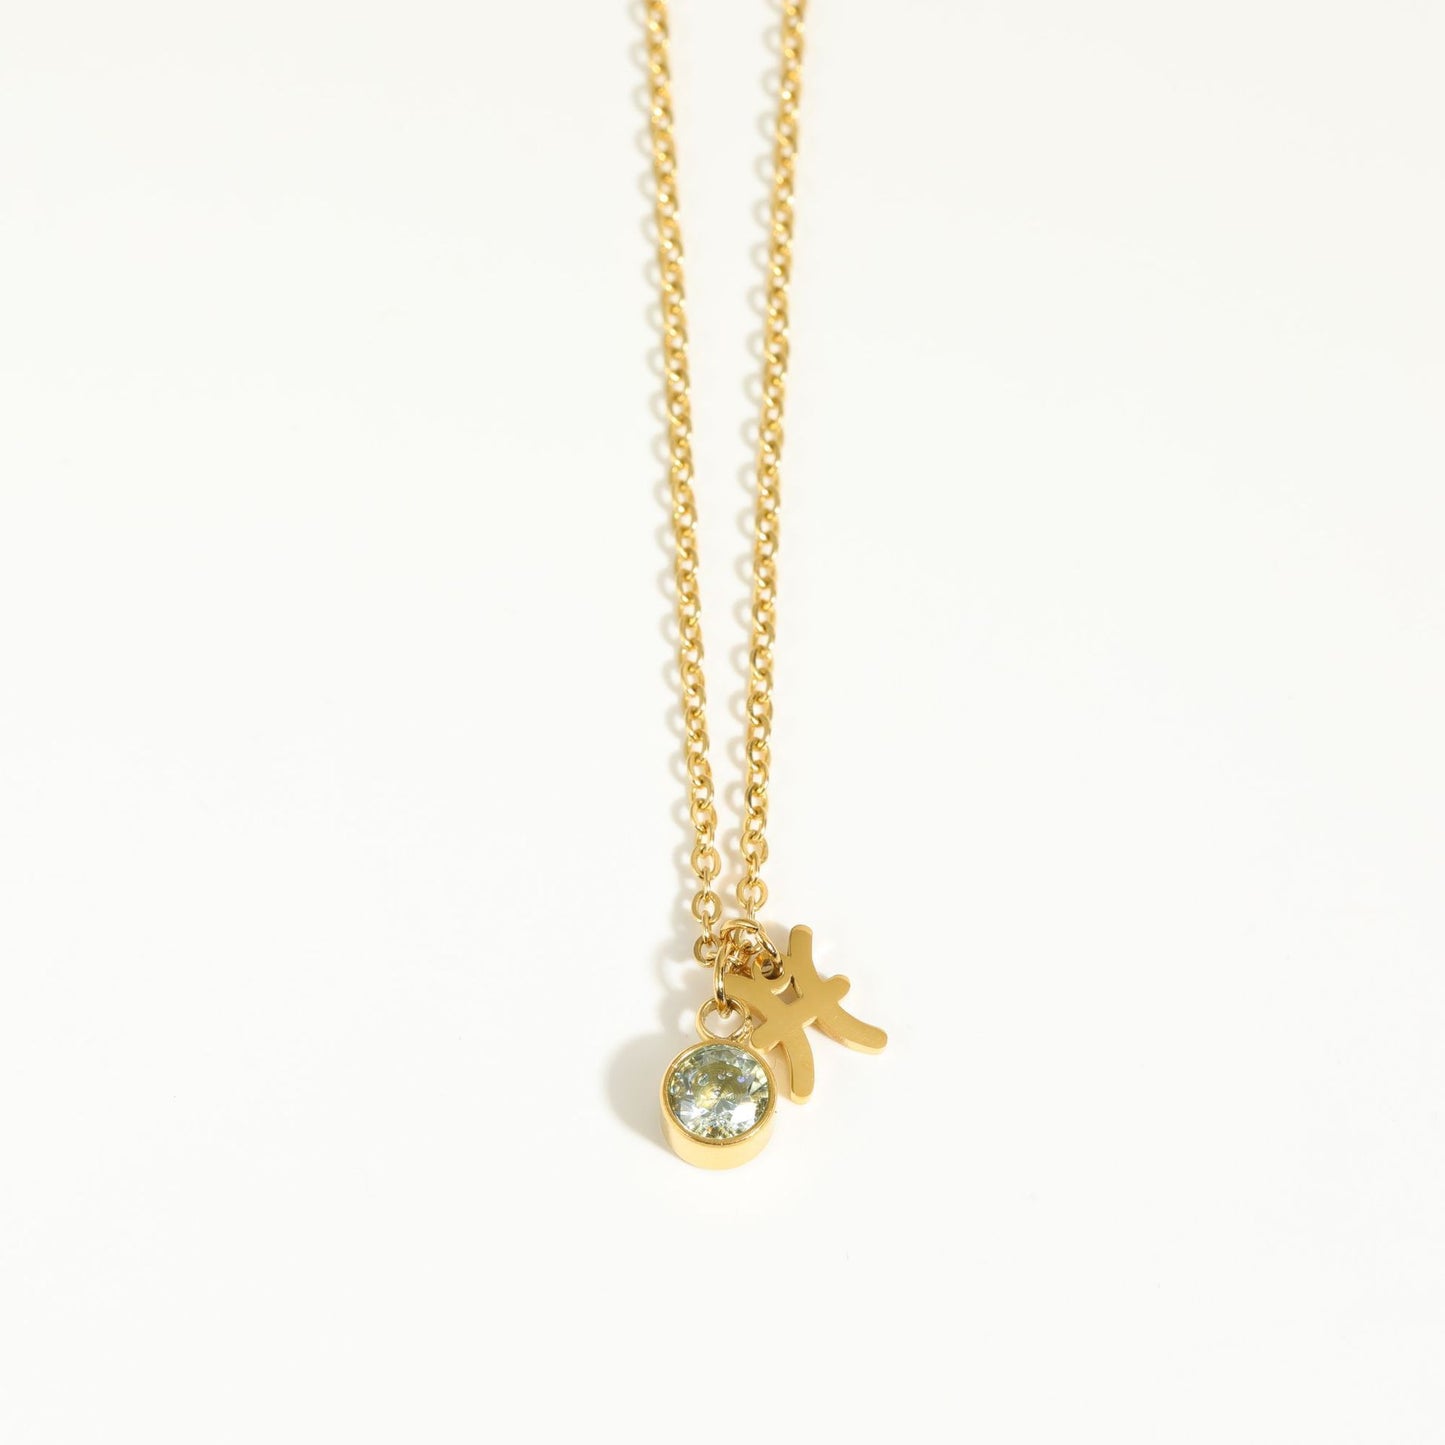 Zodiac Pendant Necklace with birthstone